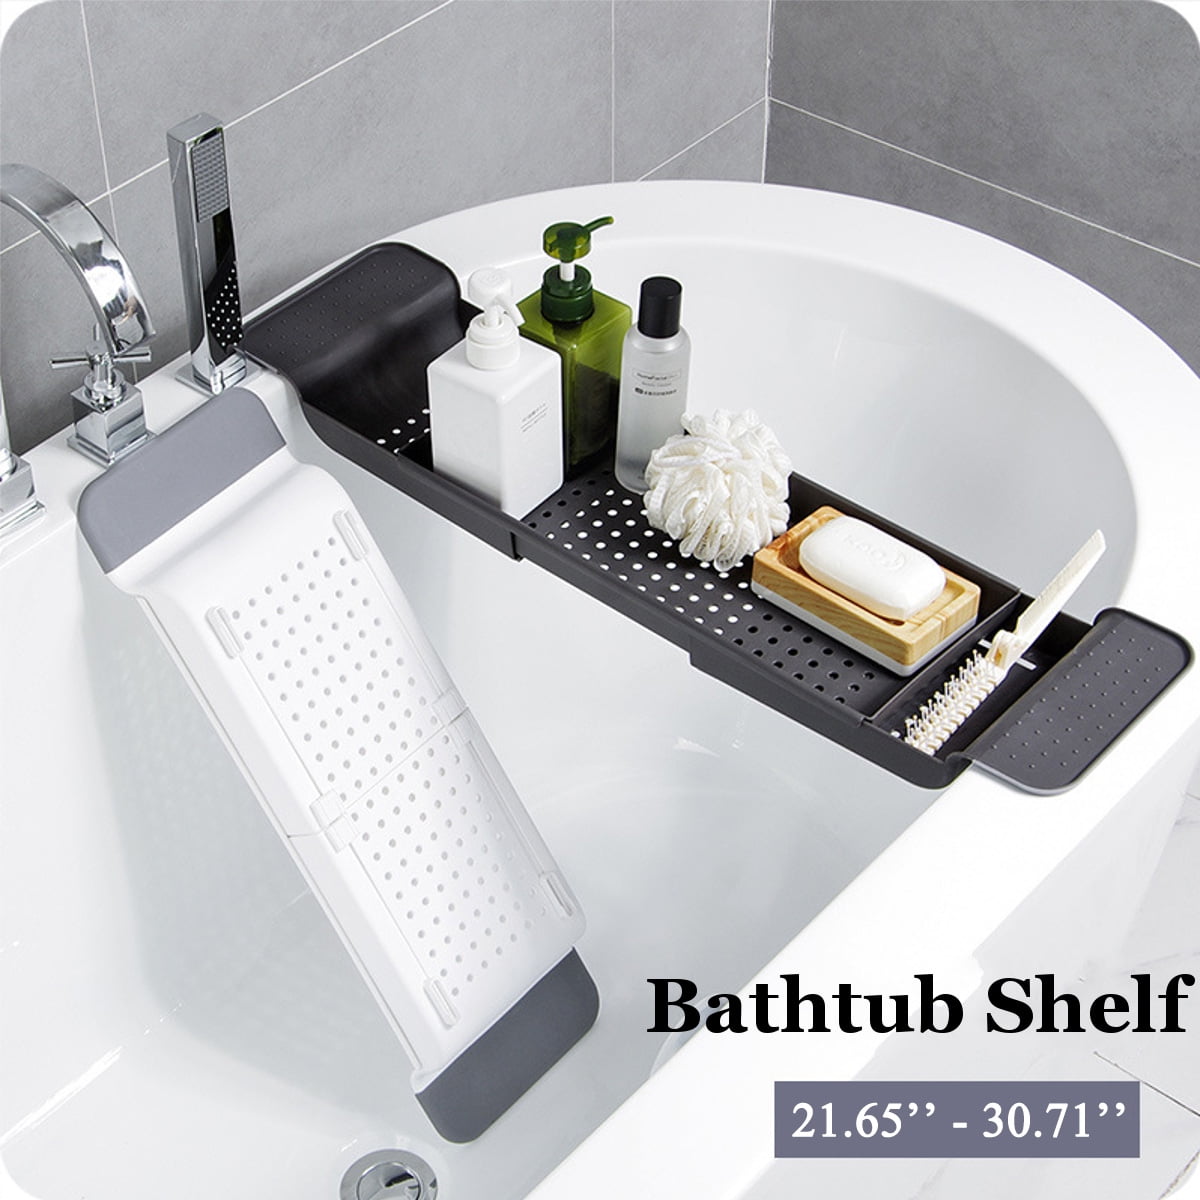 Bath Tub Rack Extendable Chrome Shower Shelf Tray Tidy Caddy Storage Holder 